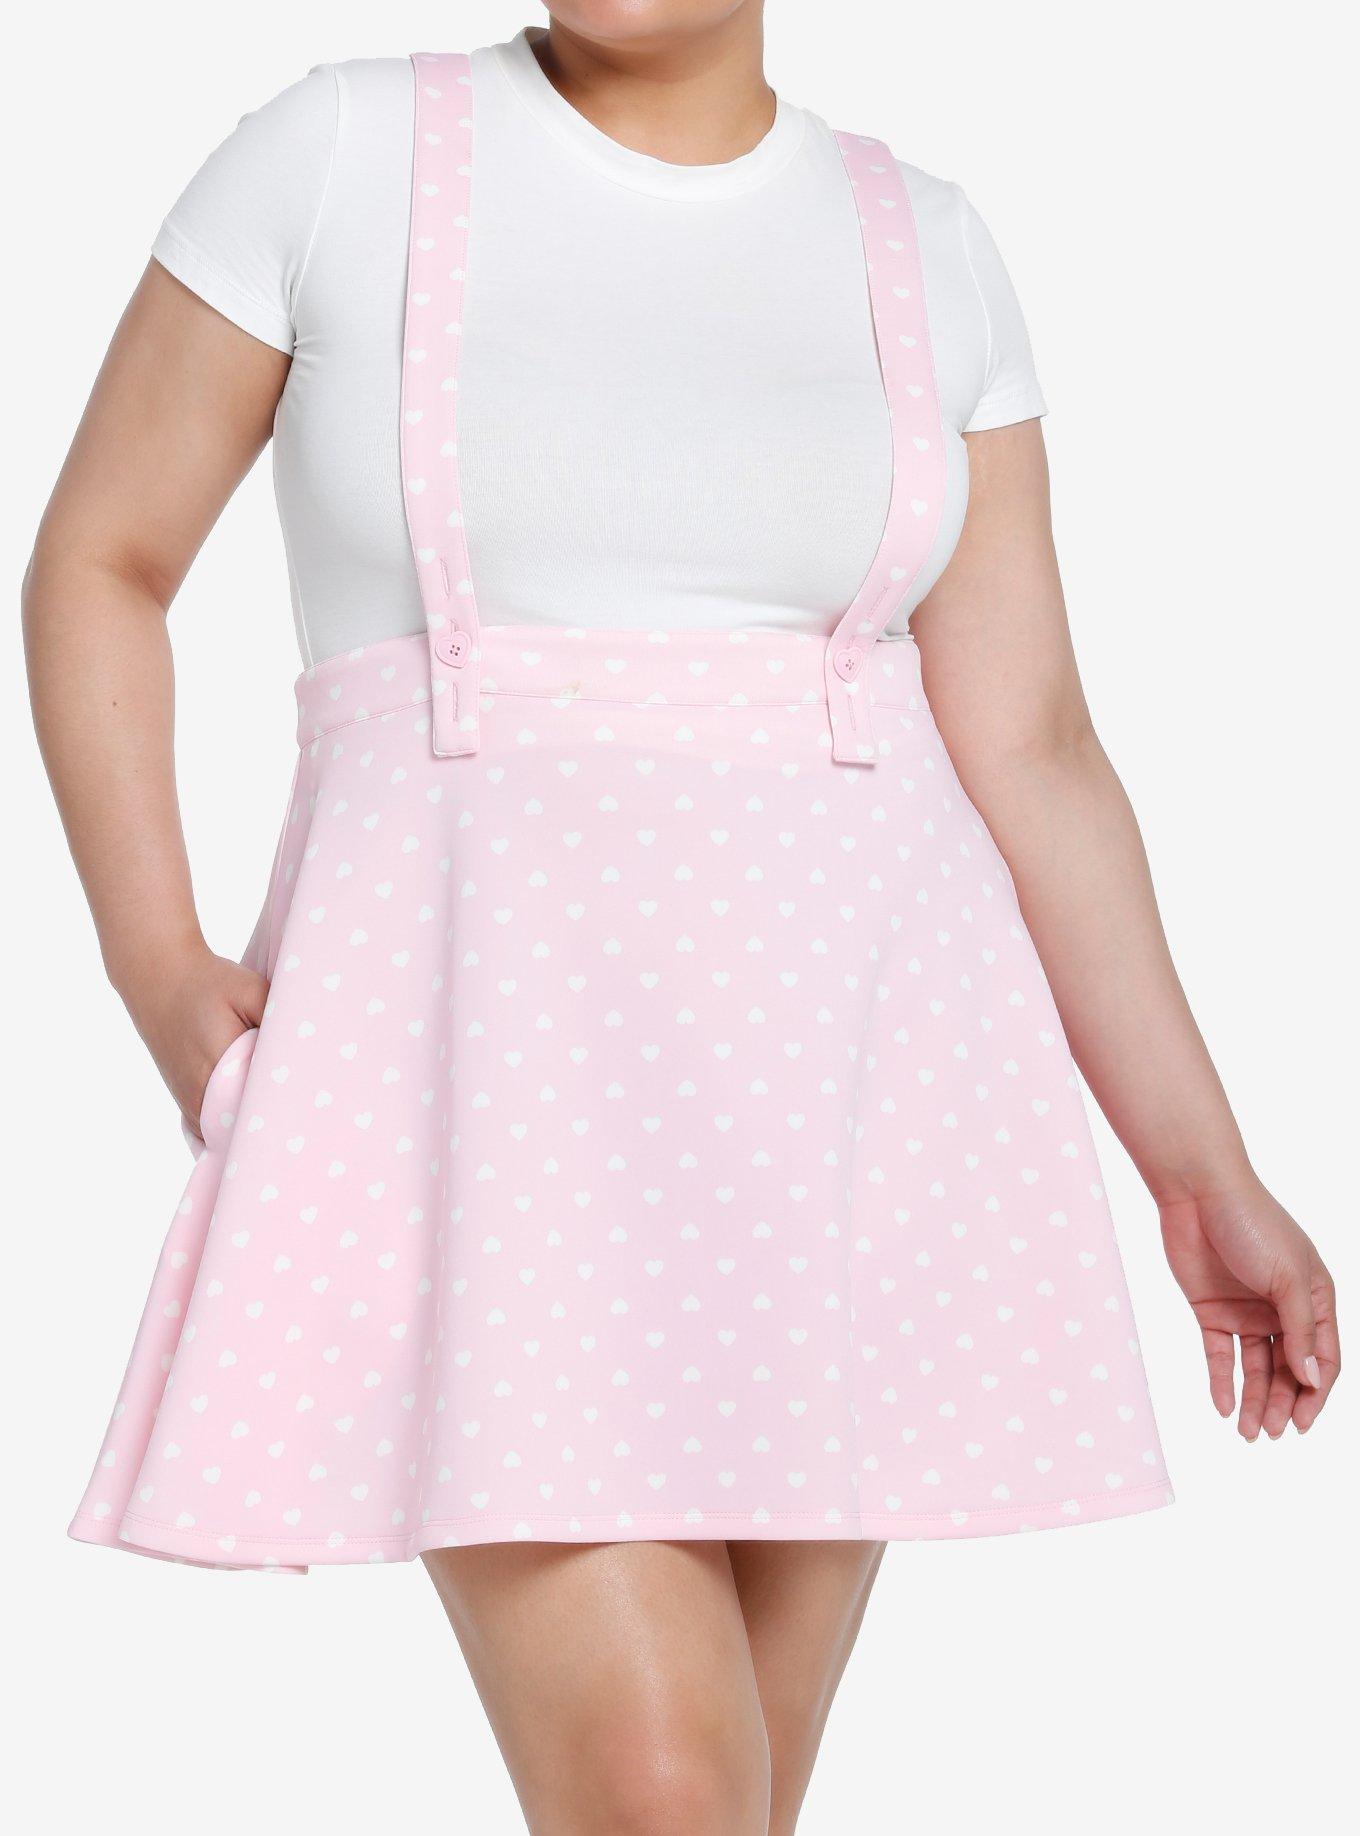 Sweet Society Pink & White Heart Bow Suspender Skirt Plus Size